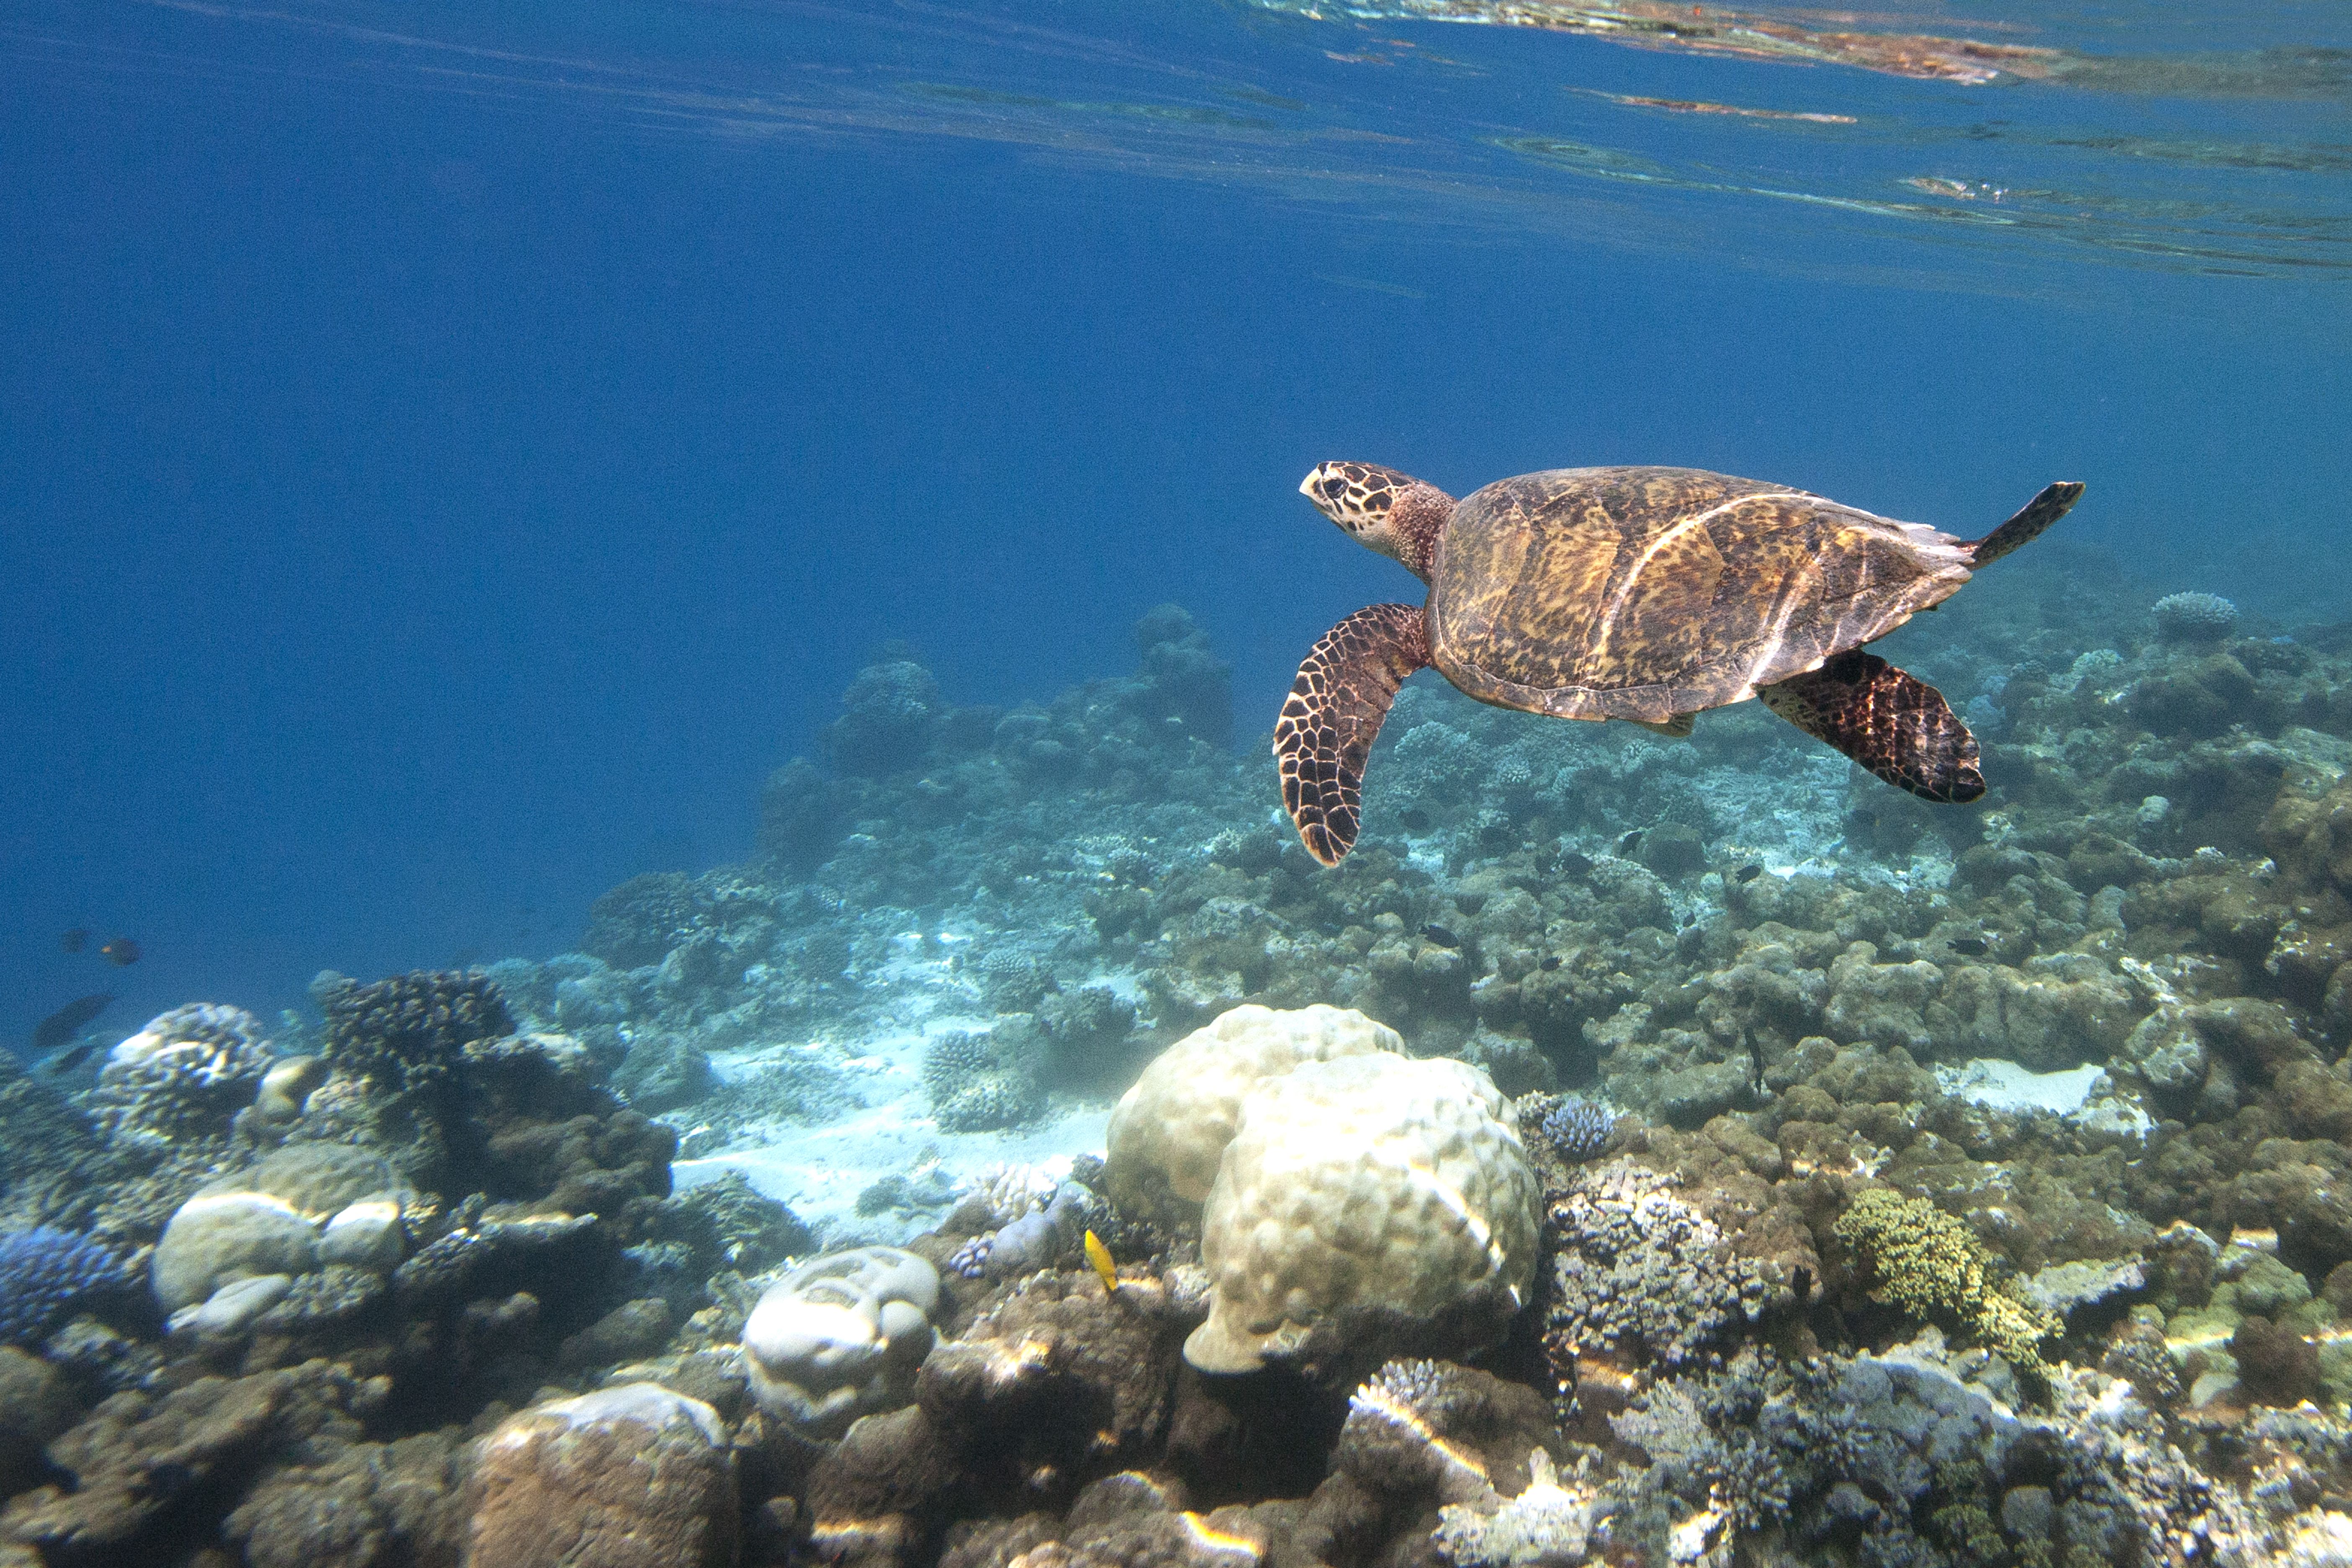 A sea turtle adventure.